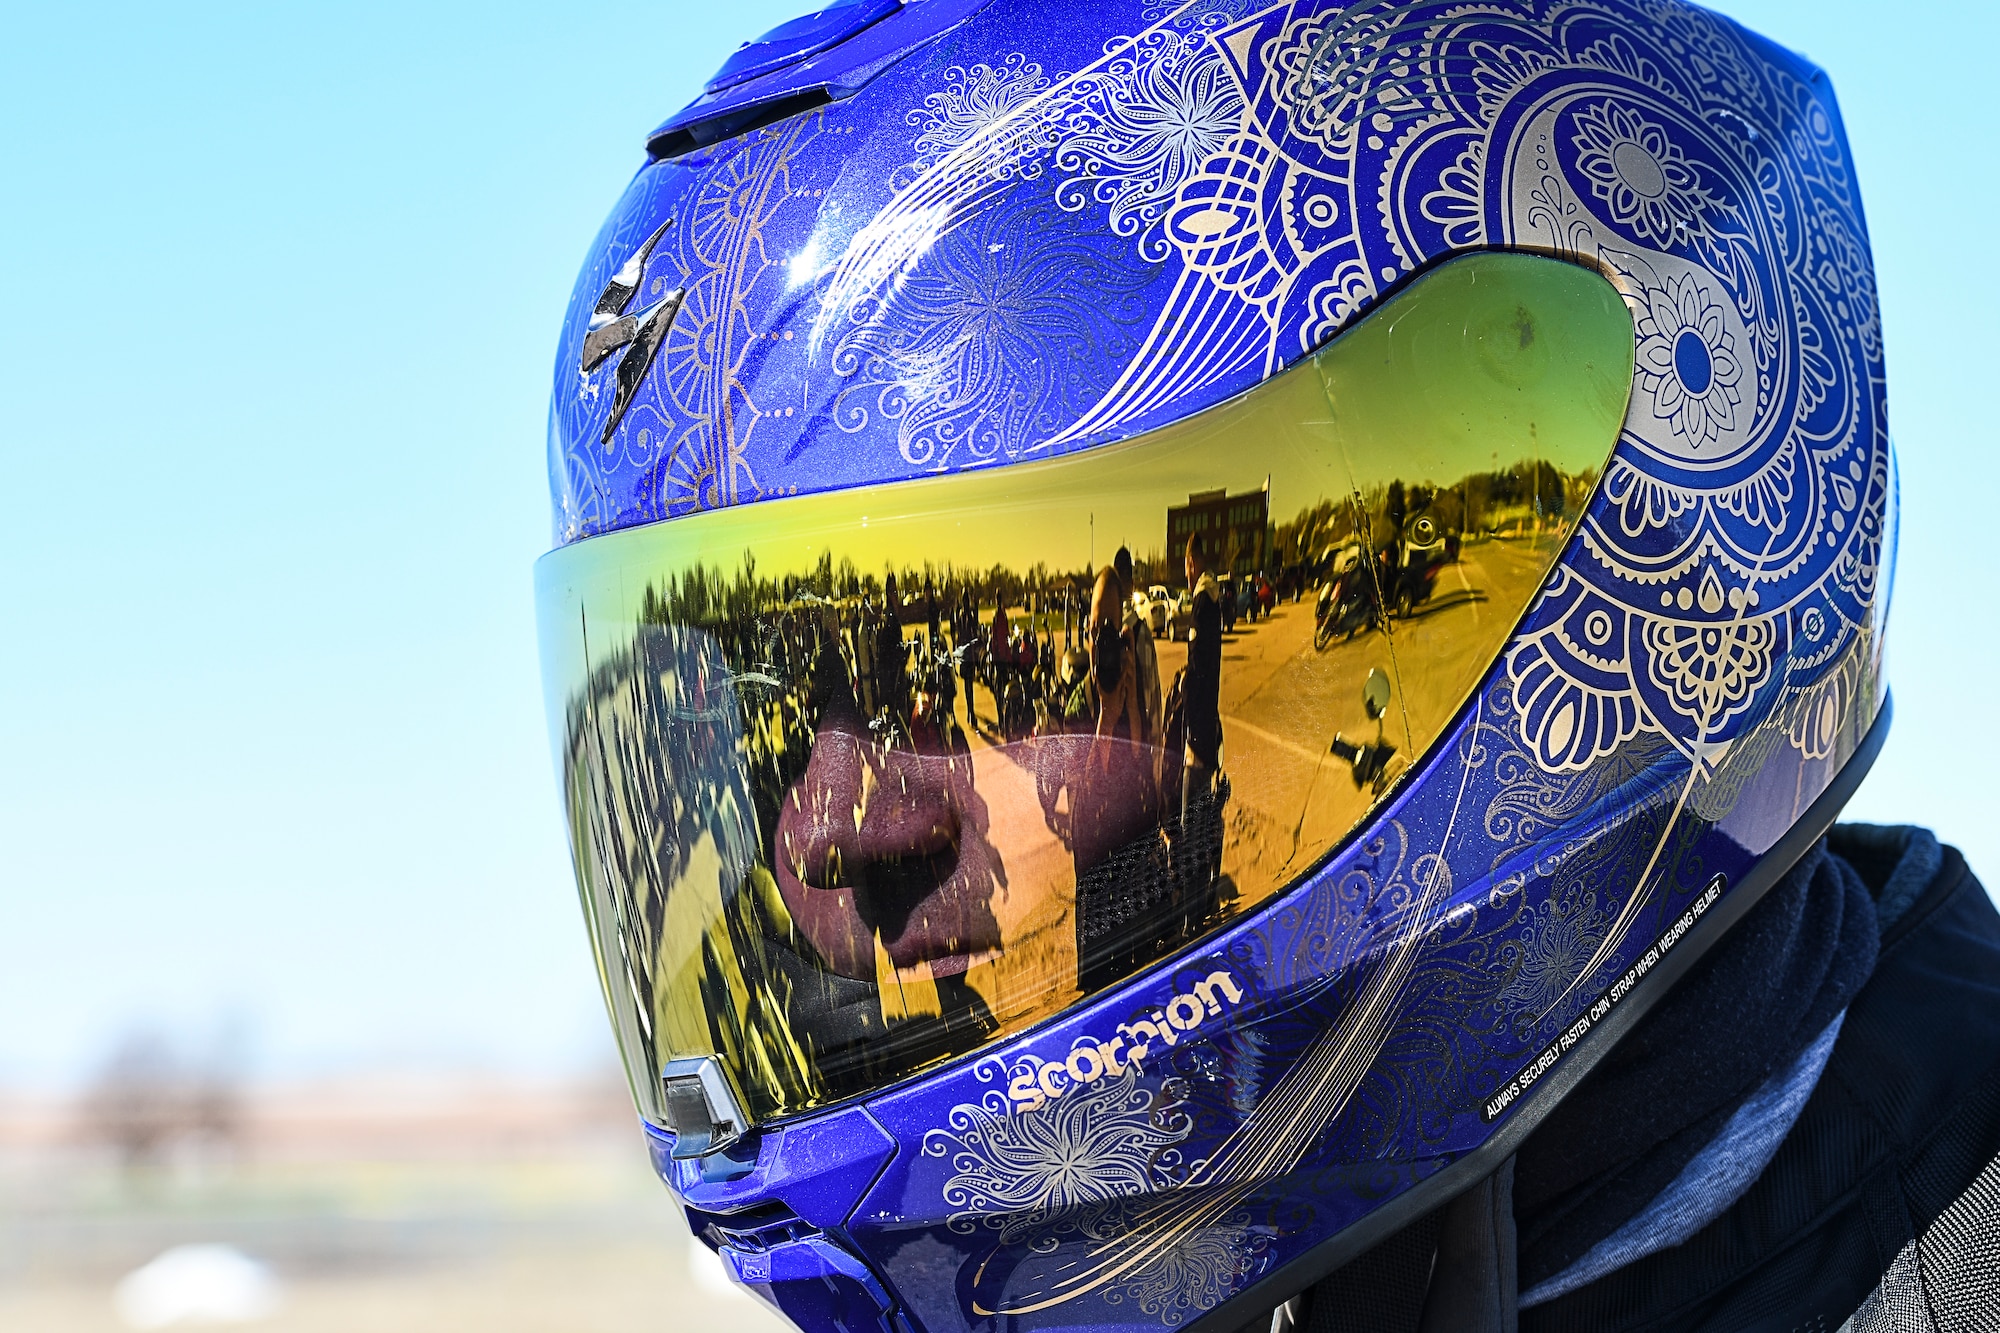 motorcycles reflected in a motorcycle helmet